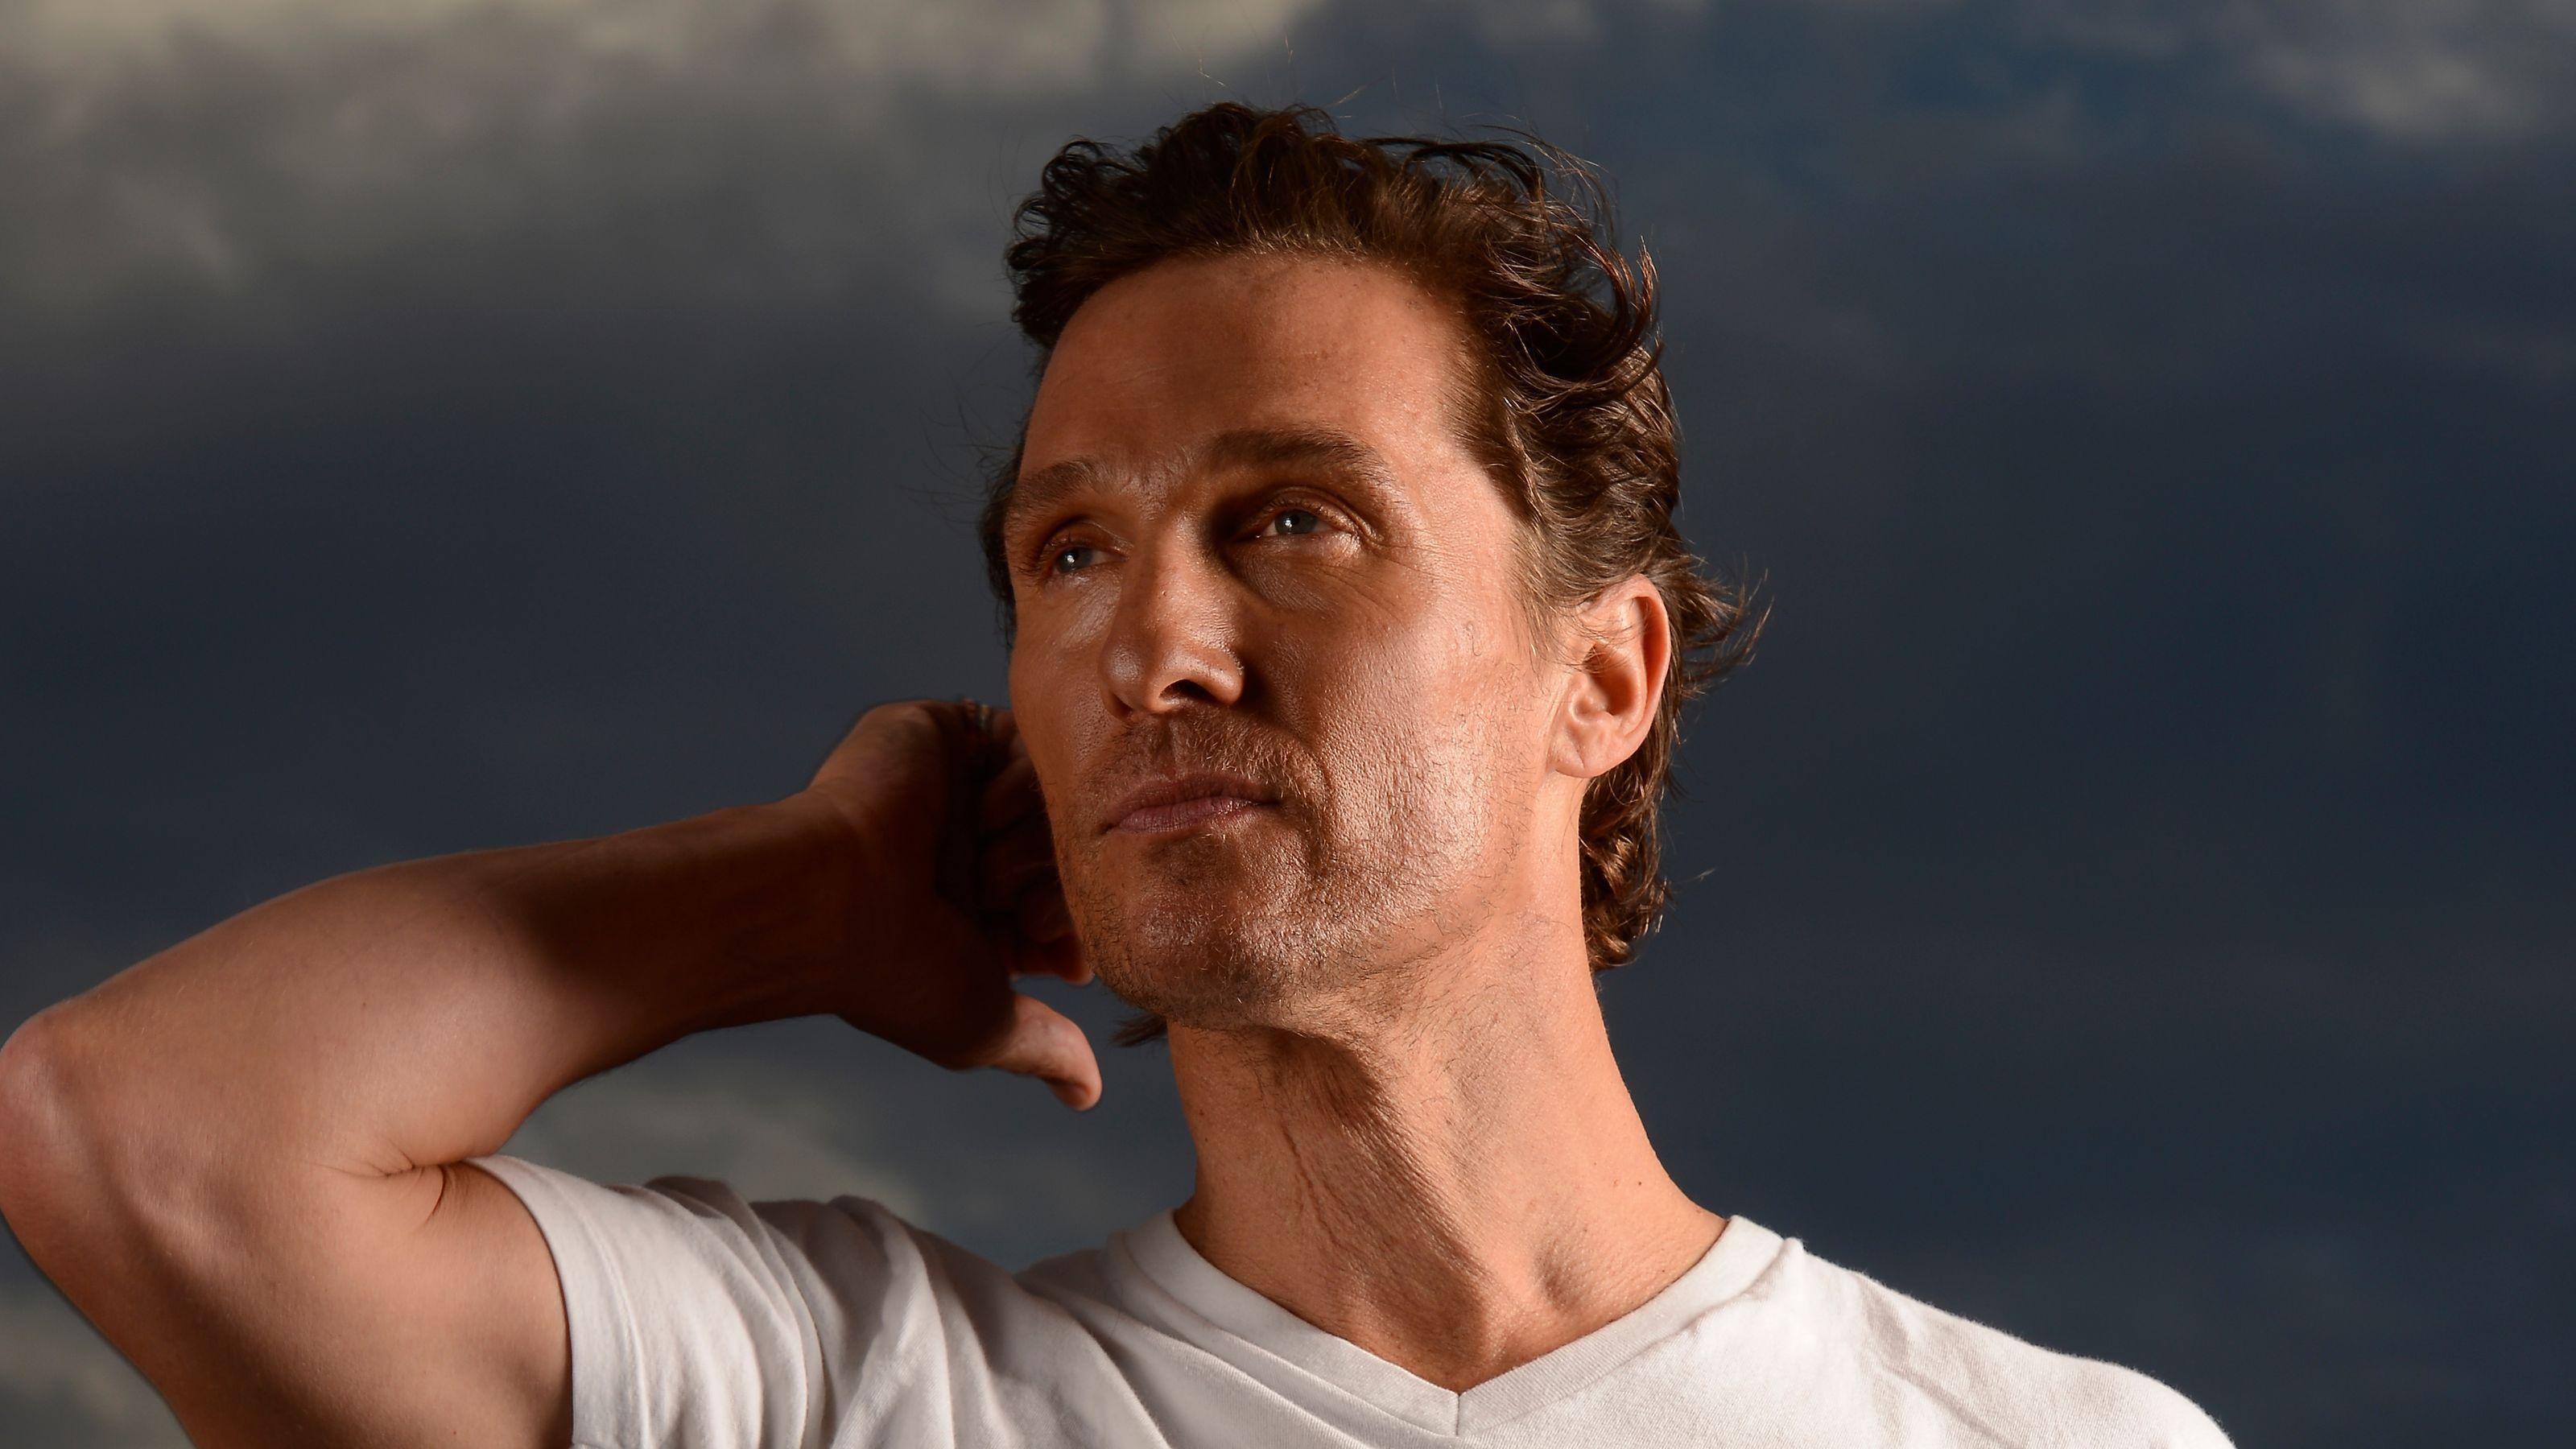 Matthew McConaughey Wallpaper Image Photo Picture Background